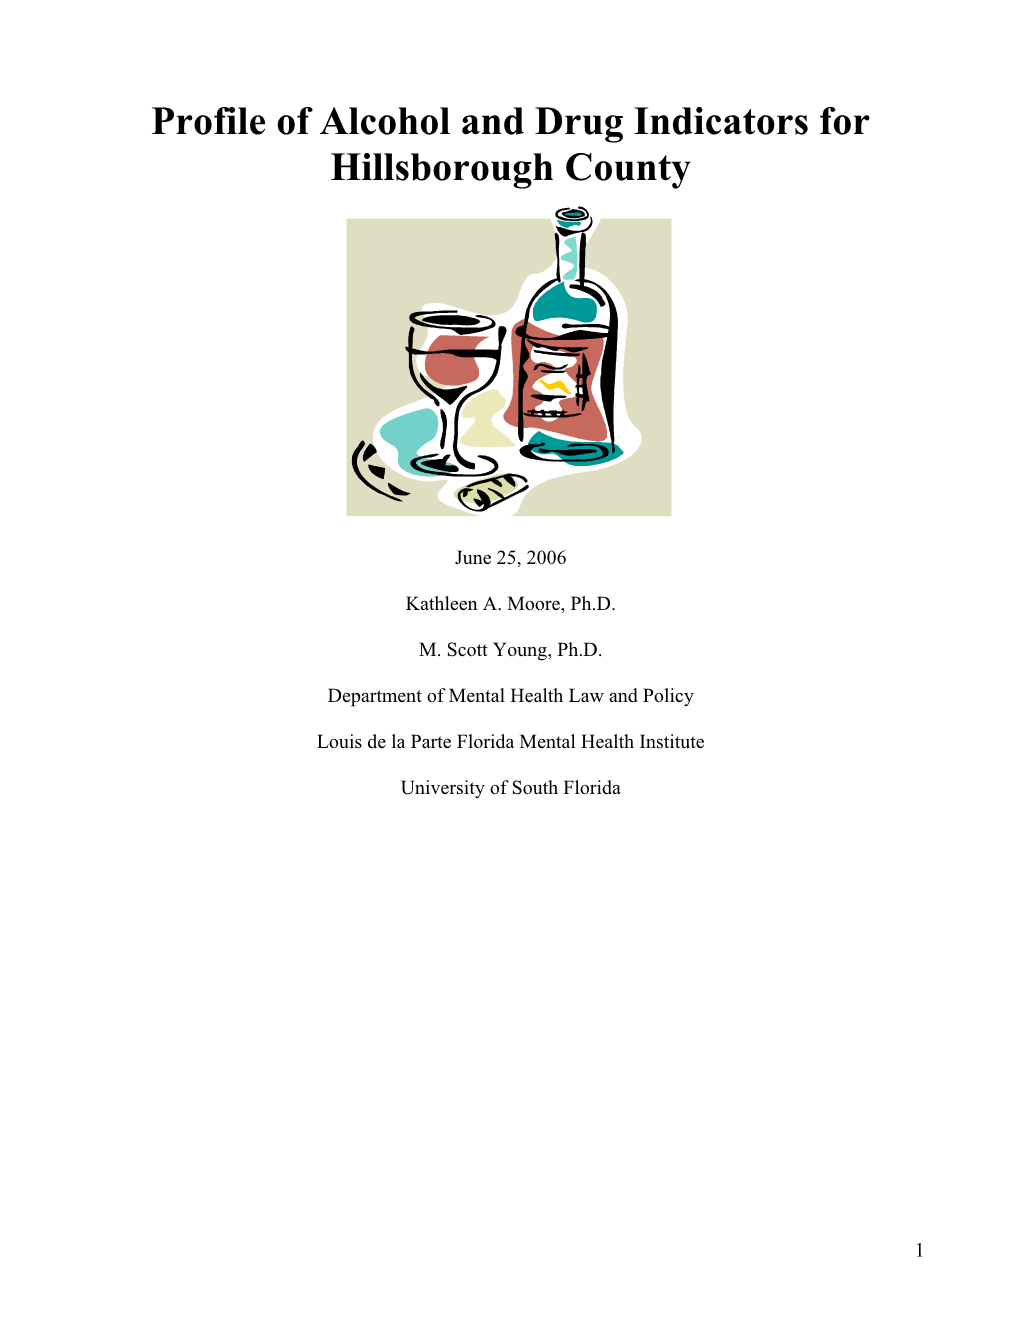 Profile of Drug Indicators for Hillsborough County 2004